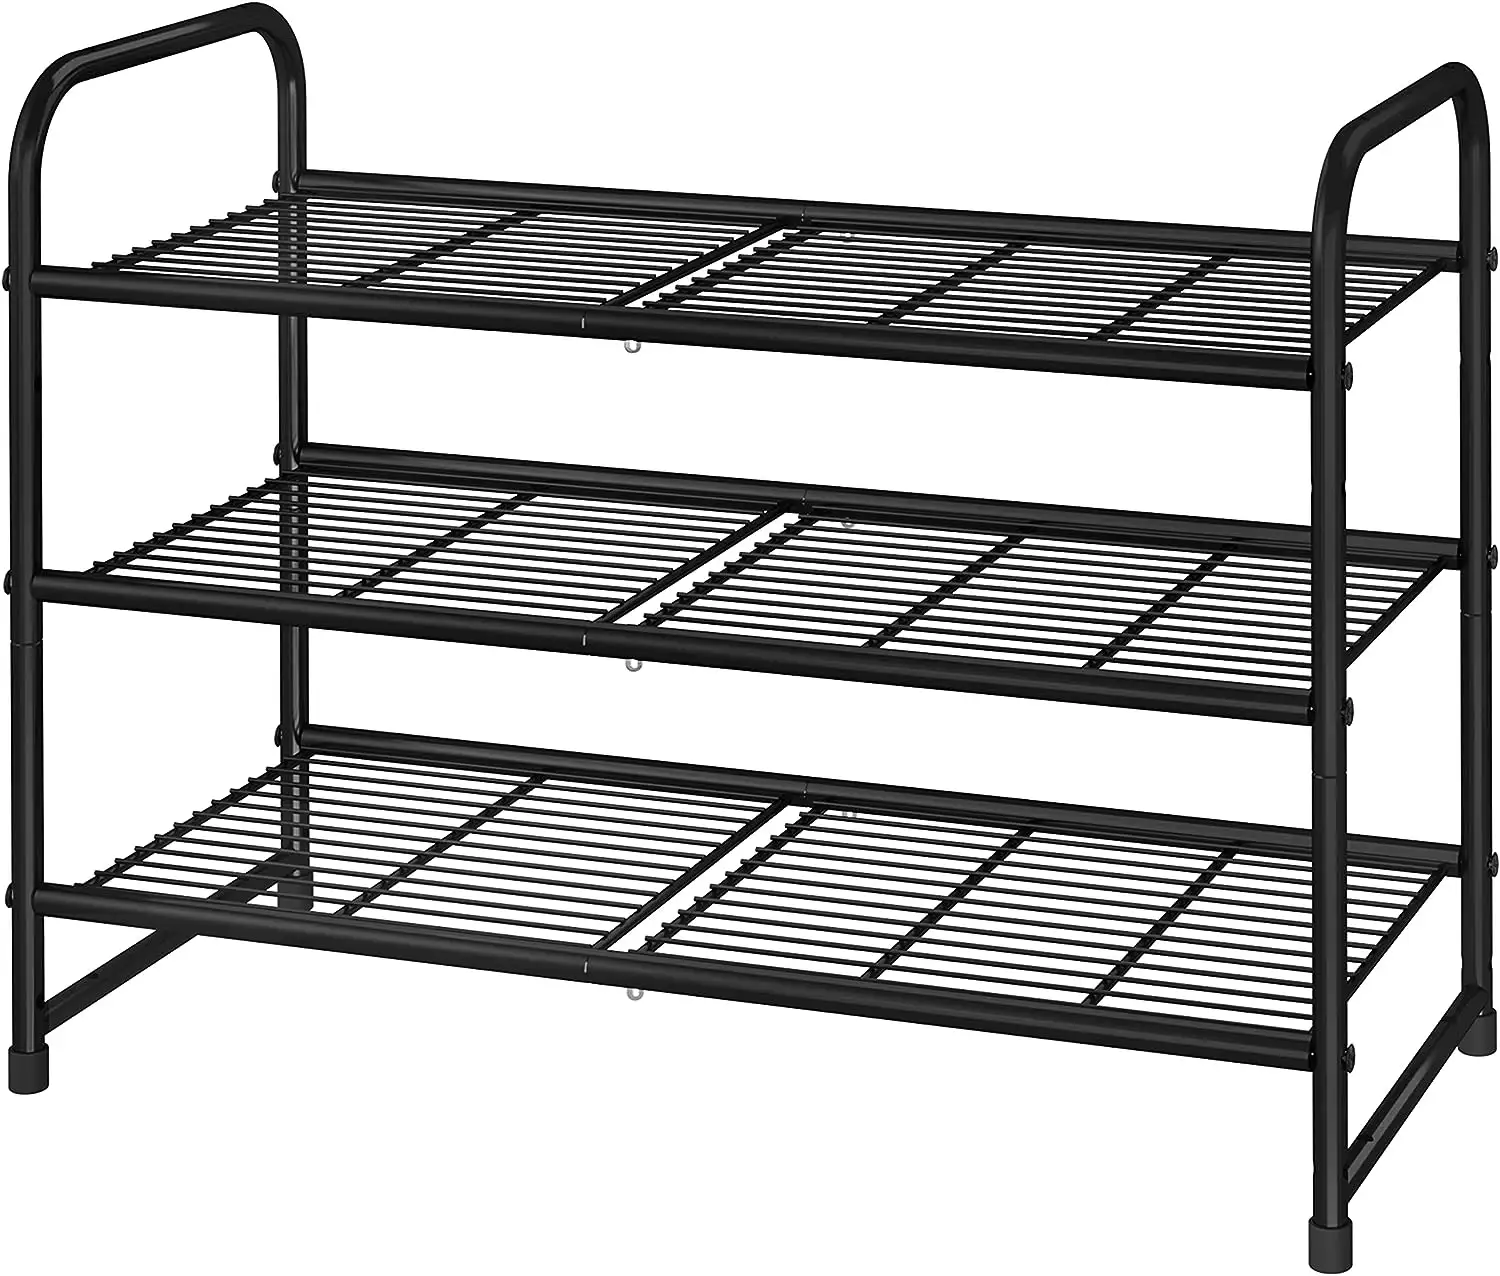 Wellshow Stackable Shoe Rack Expandable Adjustable Shoe Shelf Storage Organizer Wire Grid Black